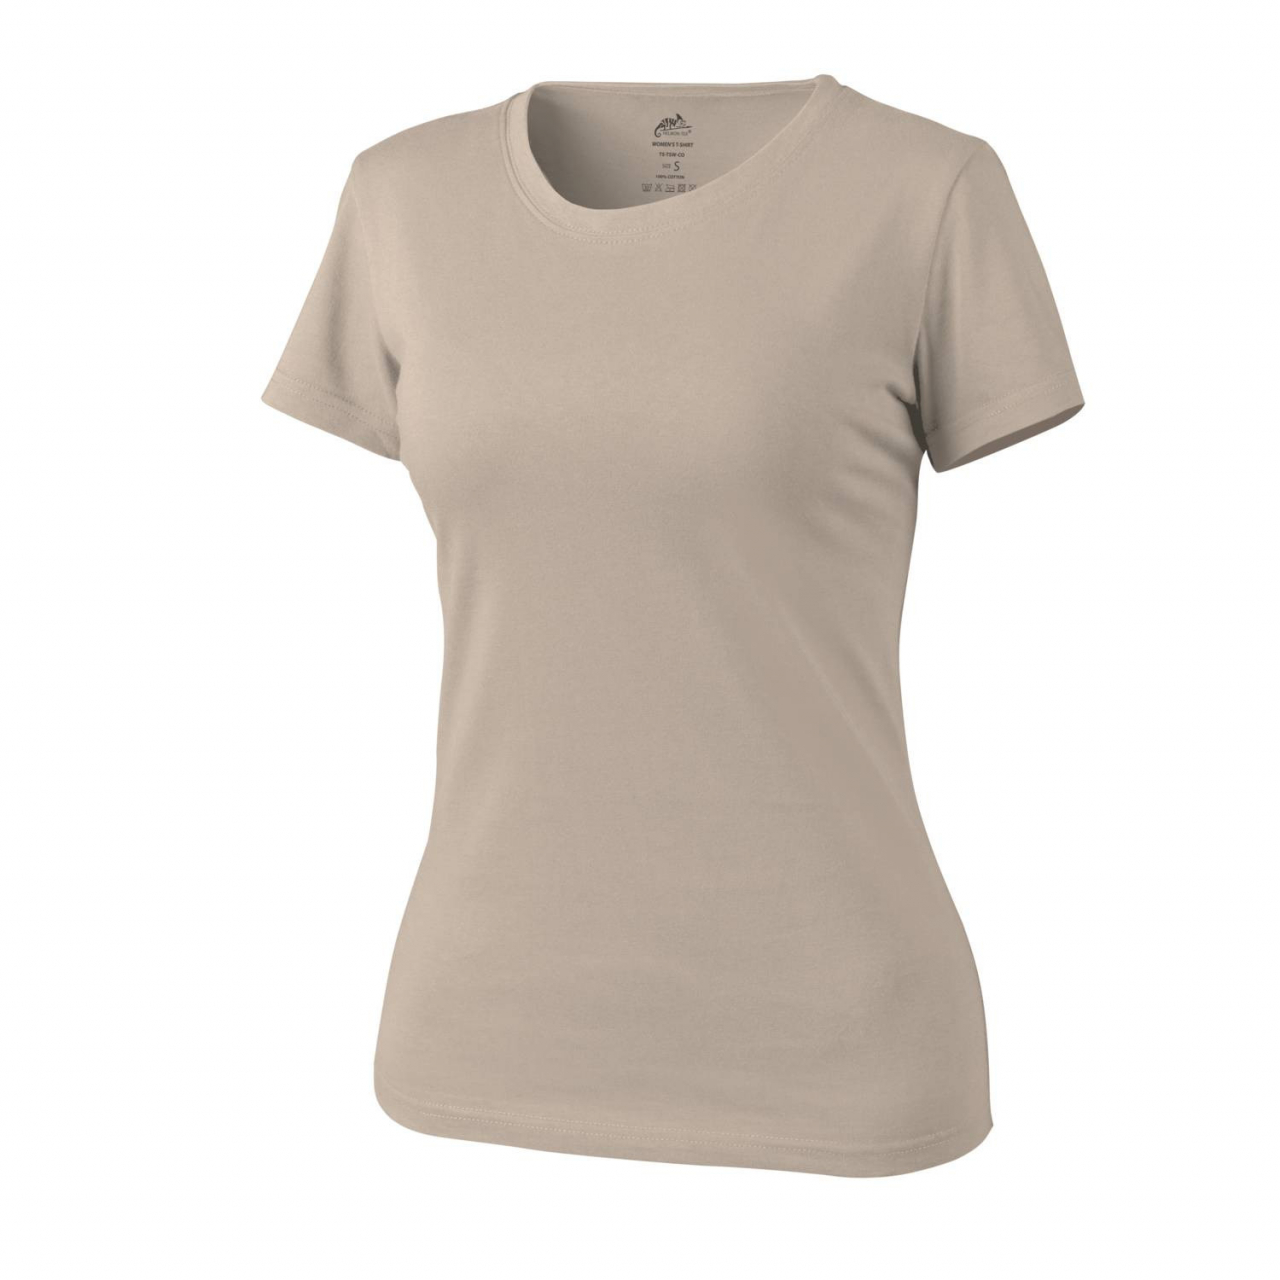 Tričko dámské Helikon Womens Shirt - béžové, S